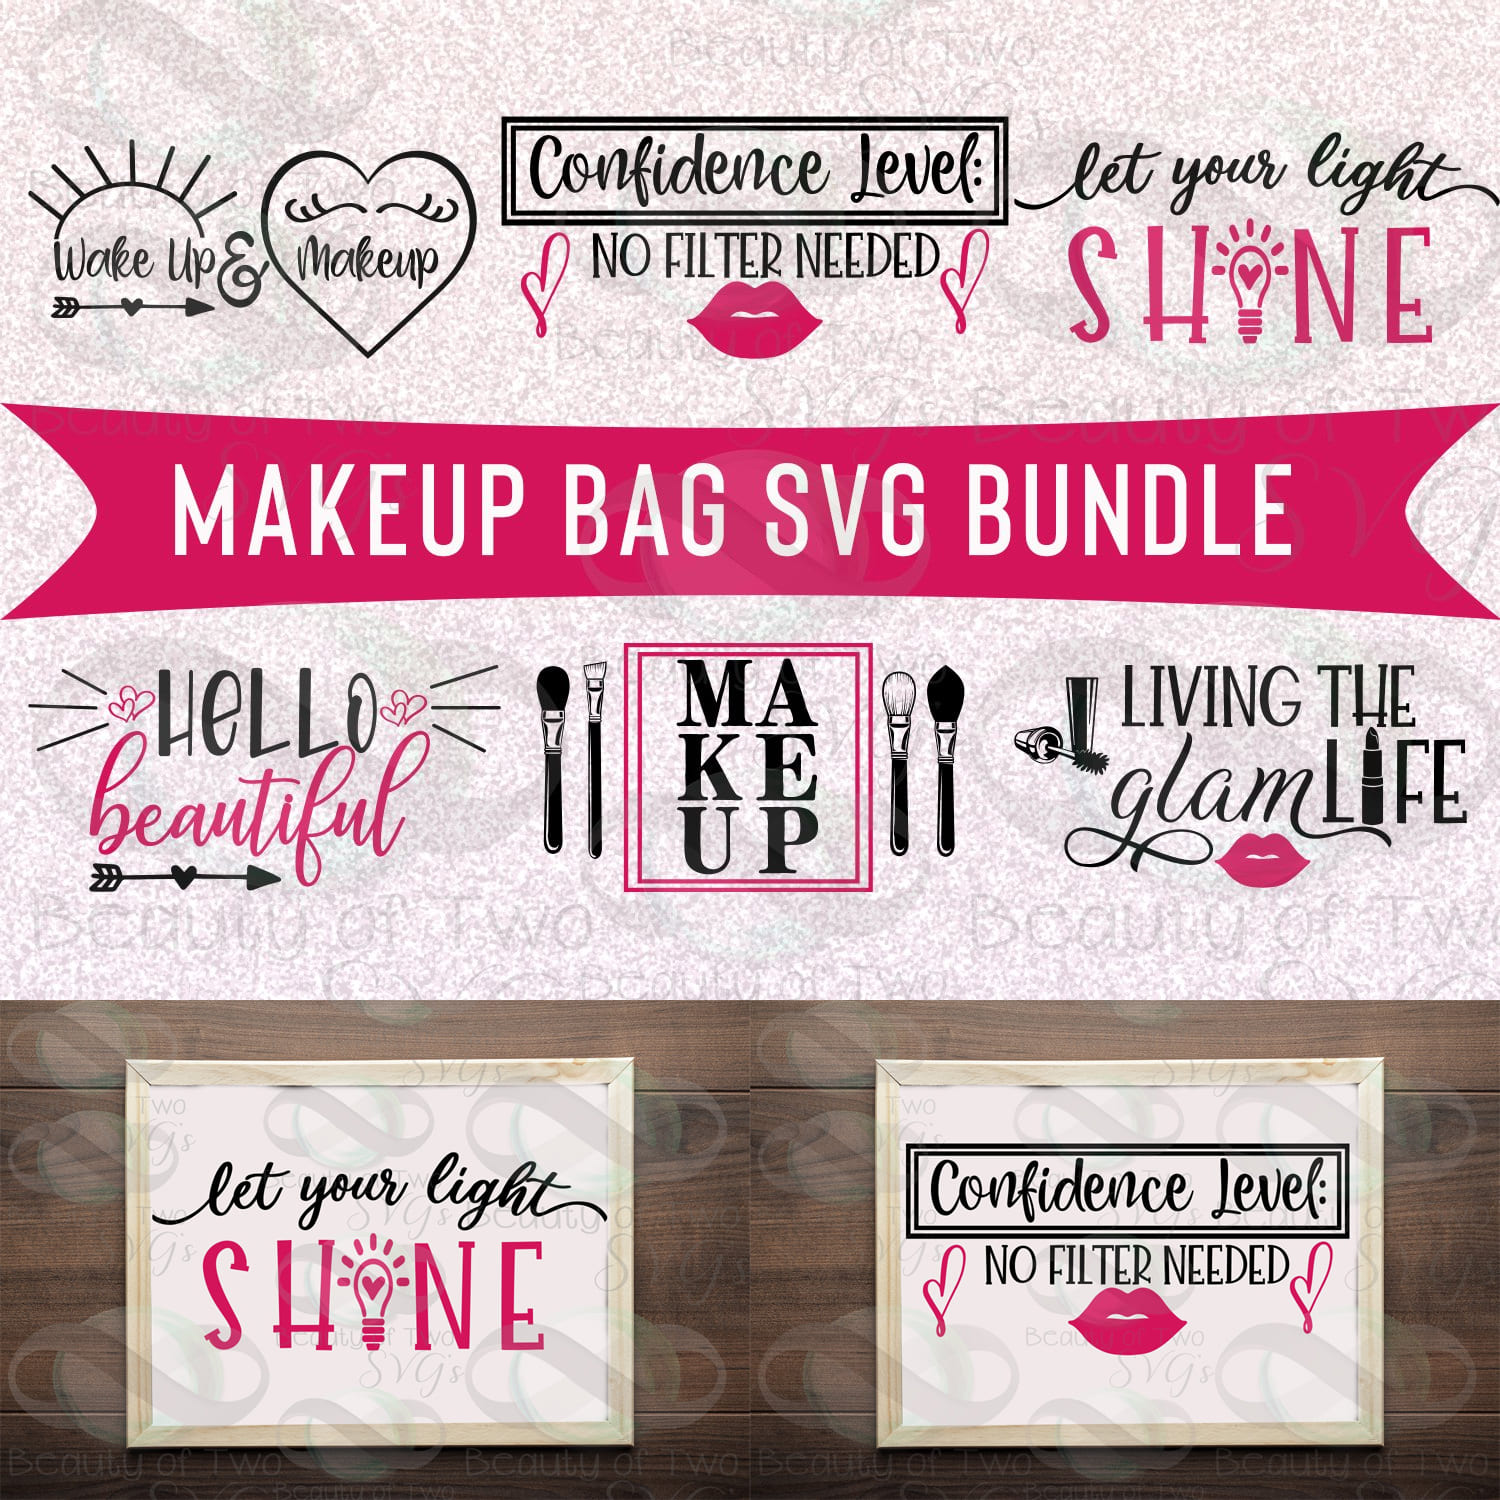 Makeup Bag SVG Bundle cover image.